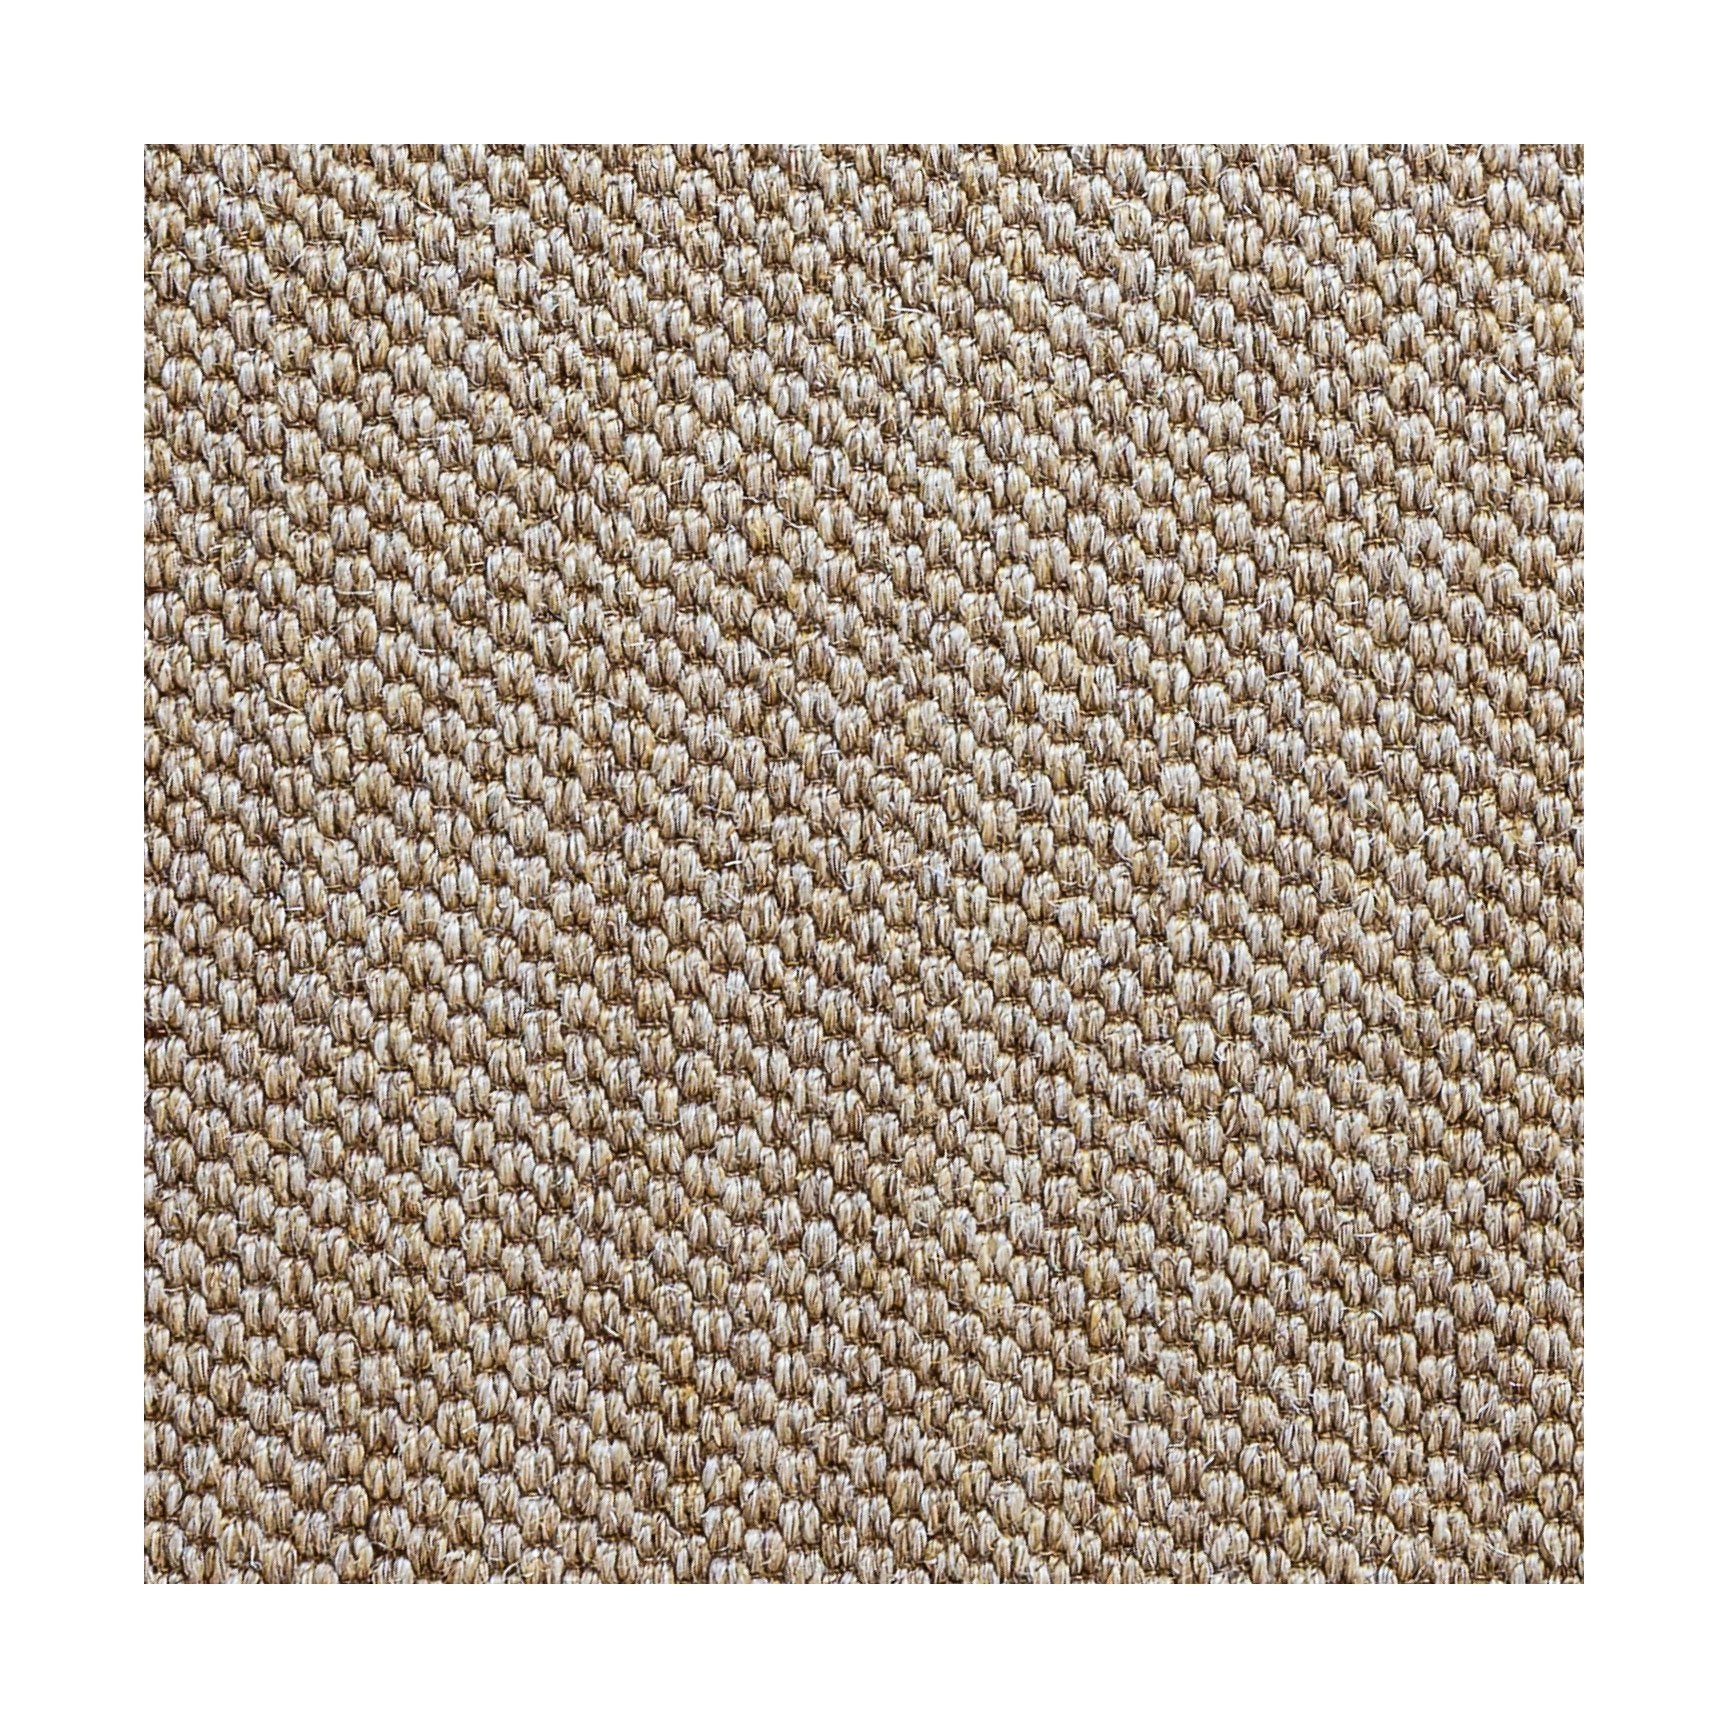 Massimo伯利兹地毯90x200，天然棕色